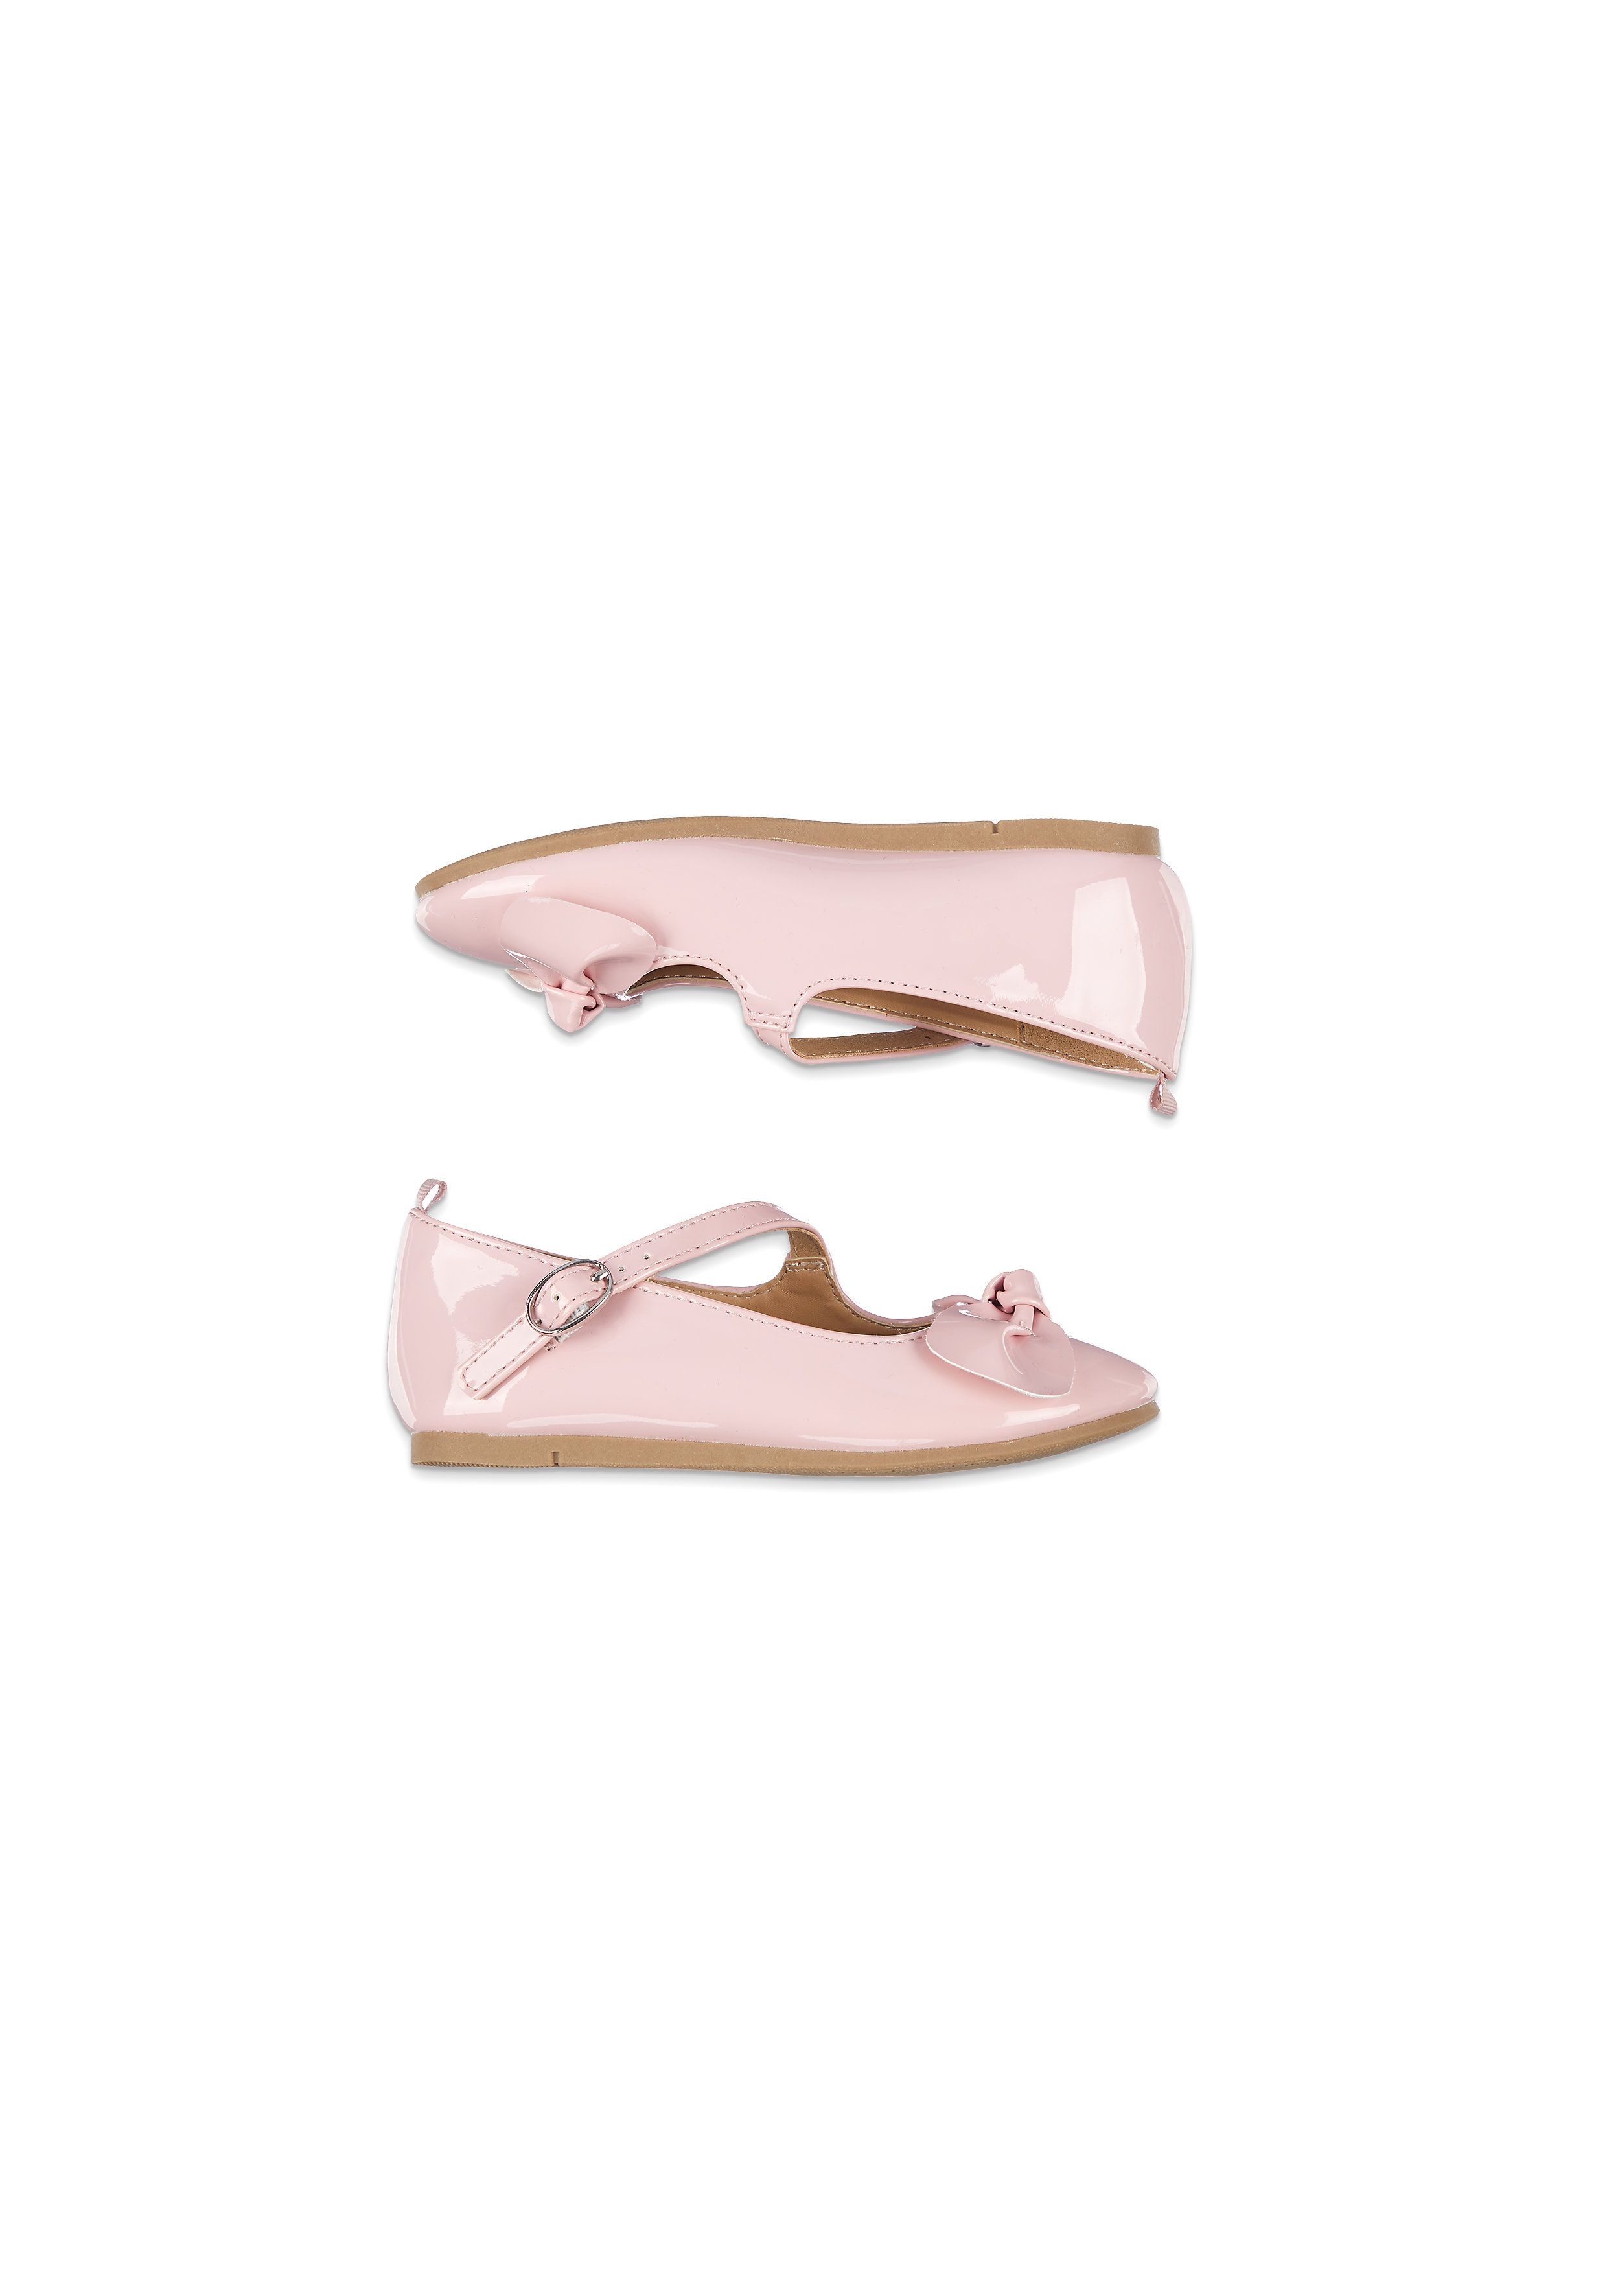 Girls Pink Patent Ballerina Shoes - Pink